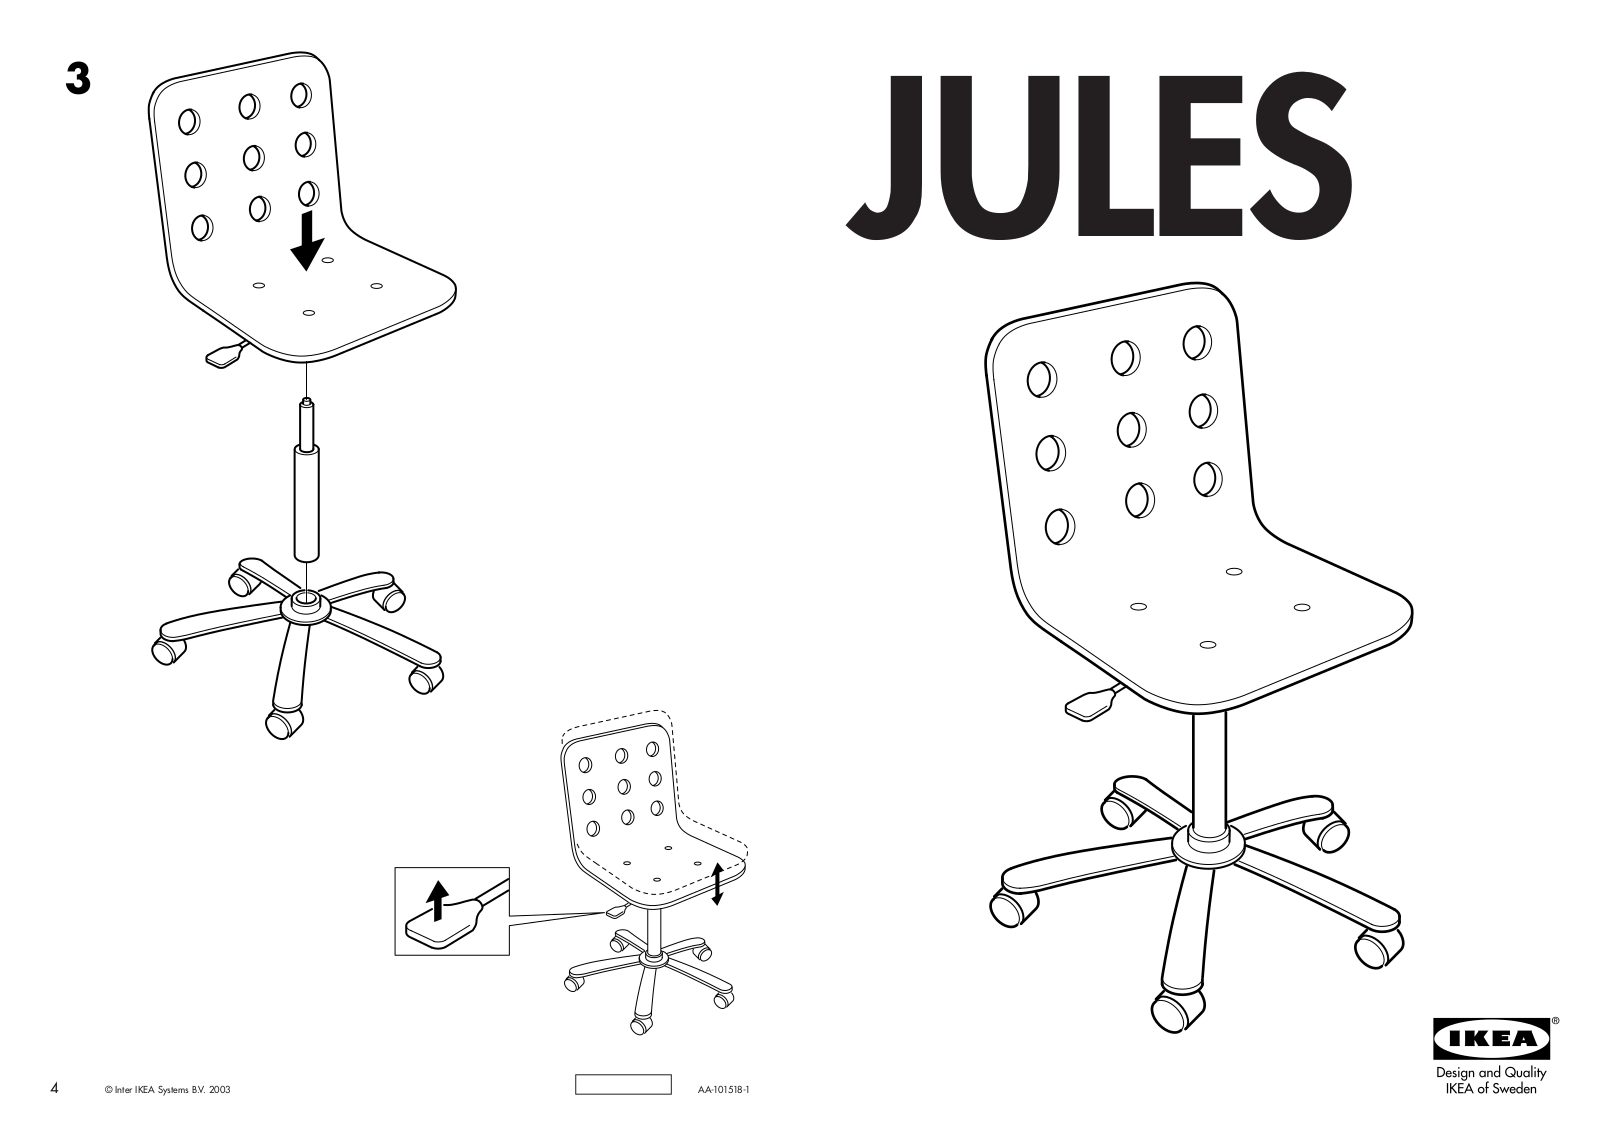 IKEA JULES JR DESK CHAIR User Manual